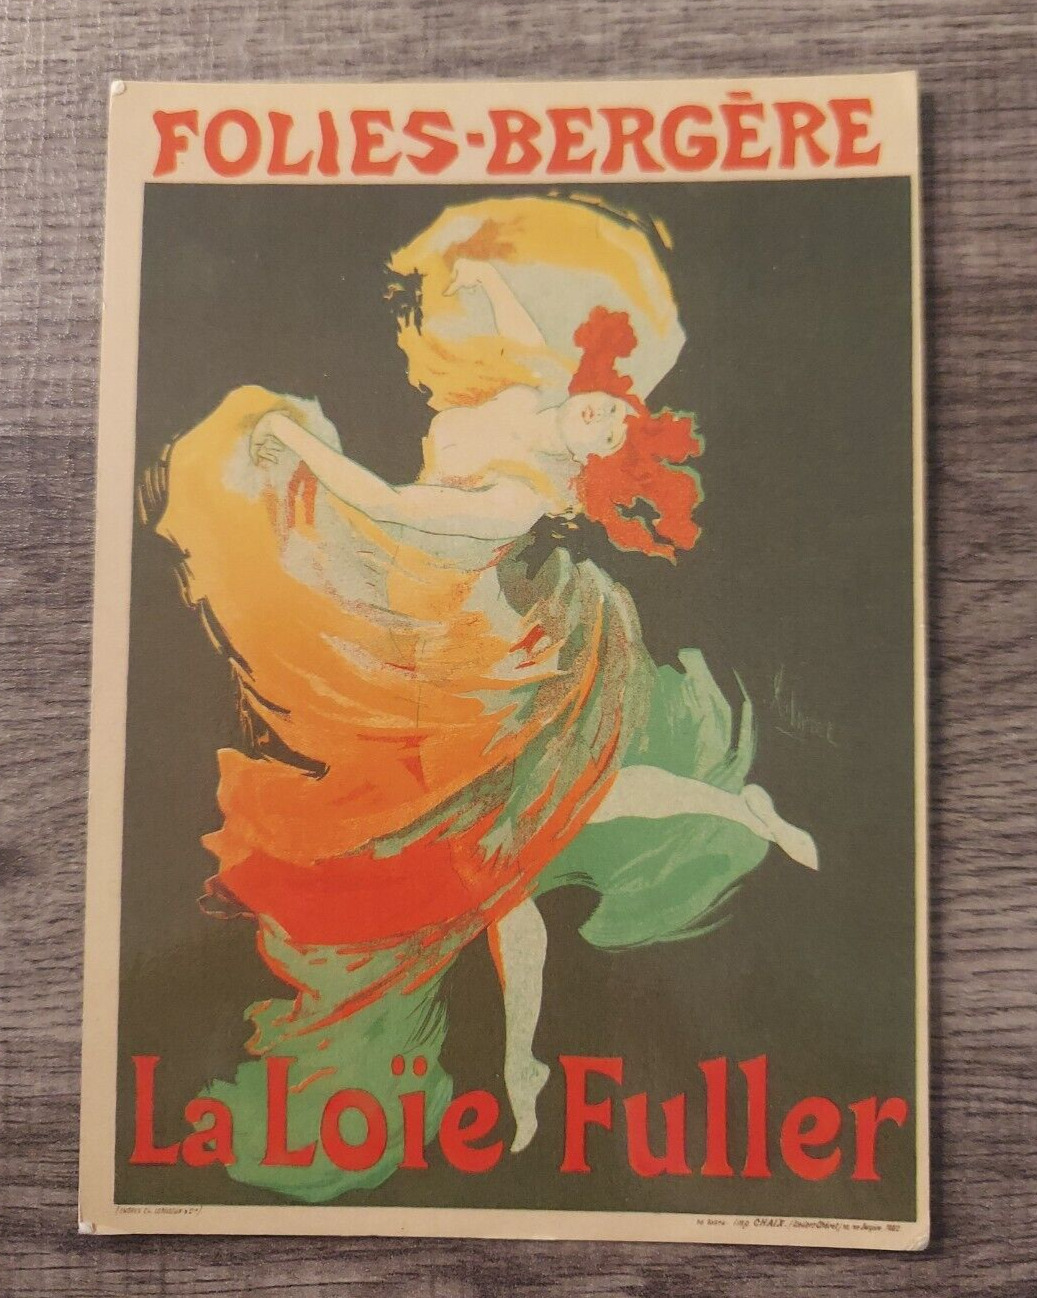 Vintage 1893 Folies-Bergere La Loie Fuller Advertising Postcard by Jules Cheret